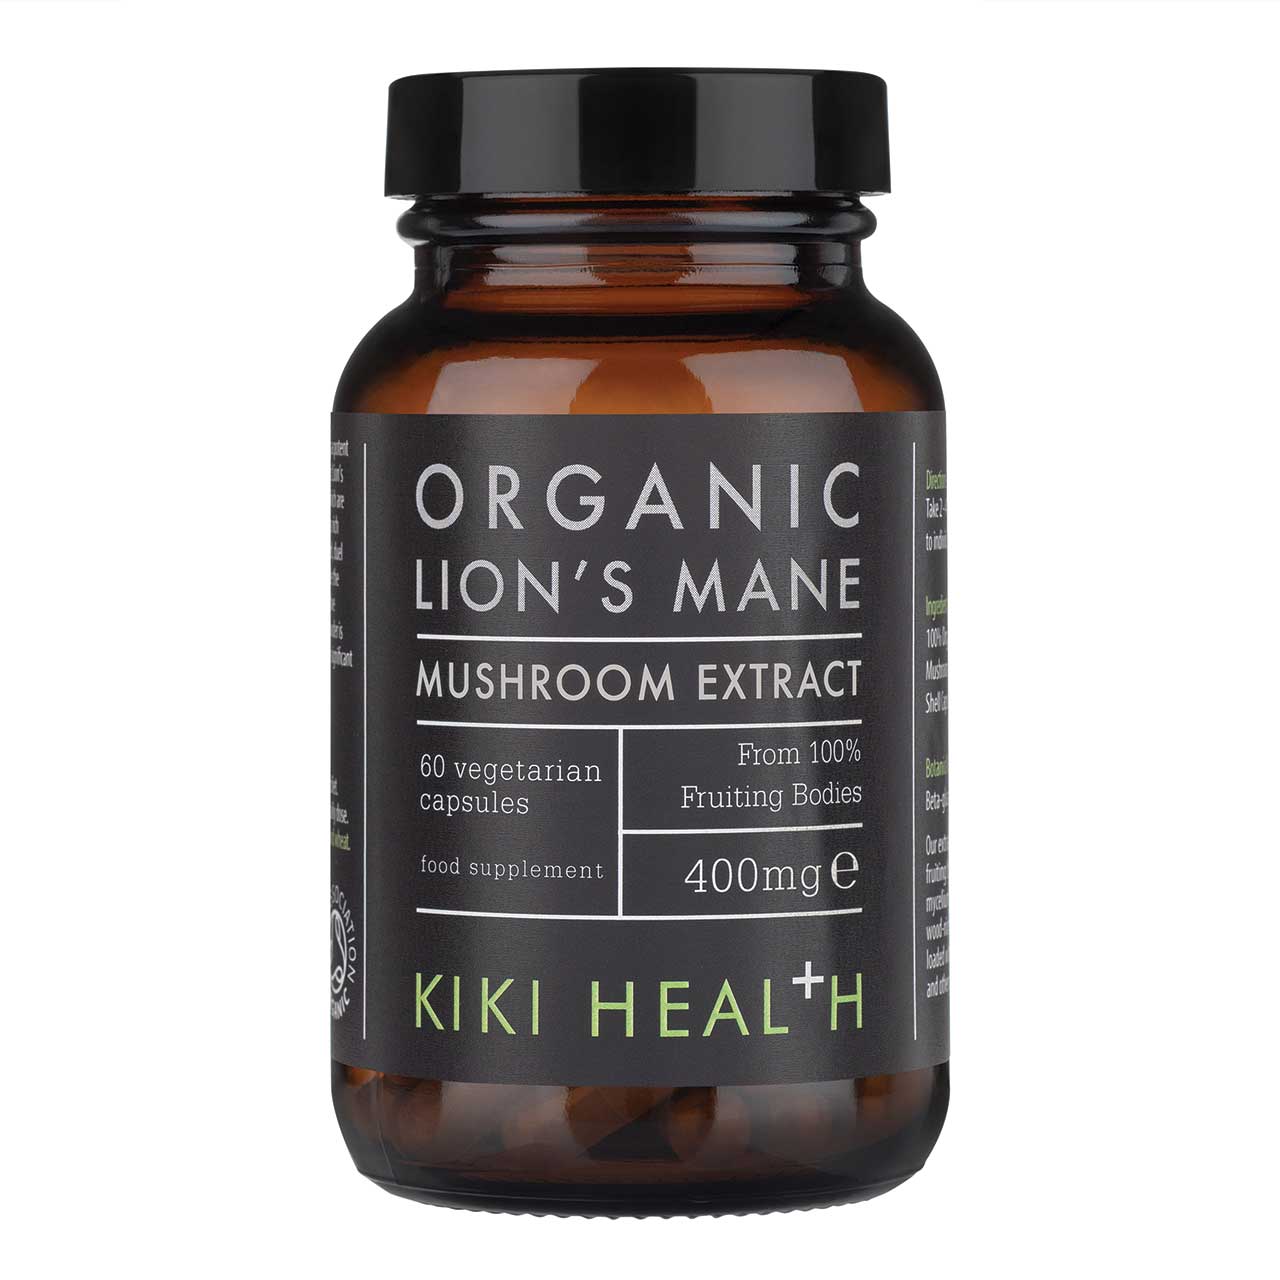 Organic Lion's Mane's Extract Capsules